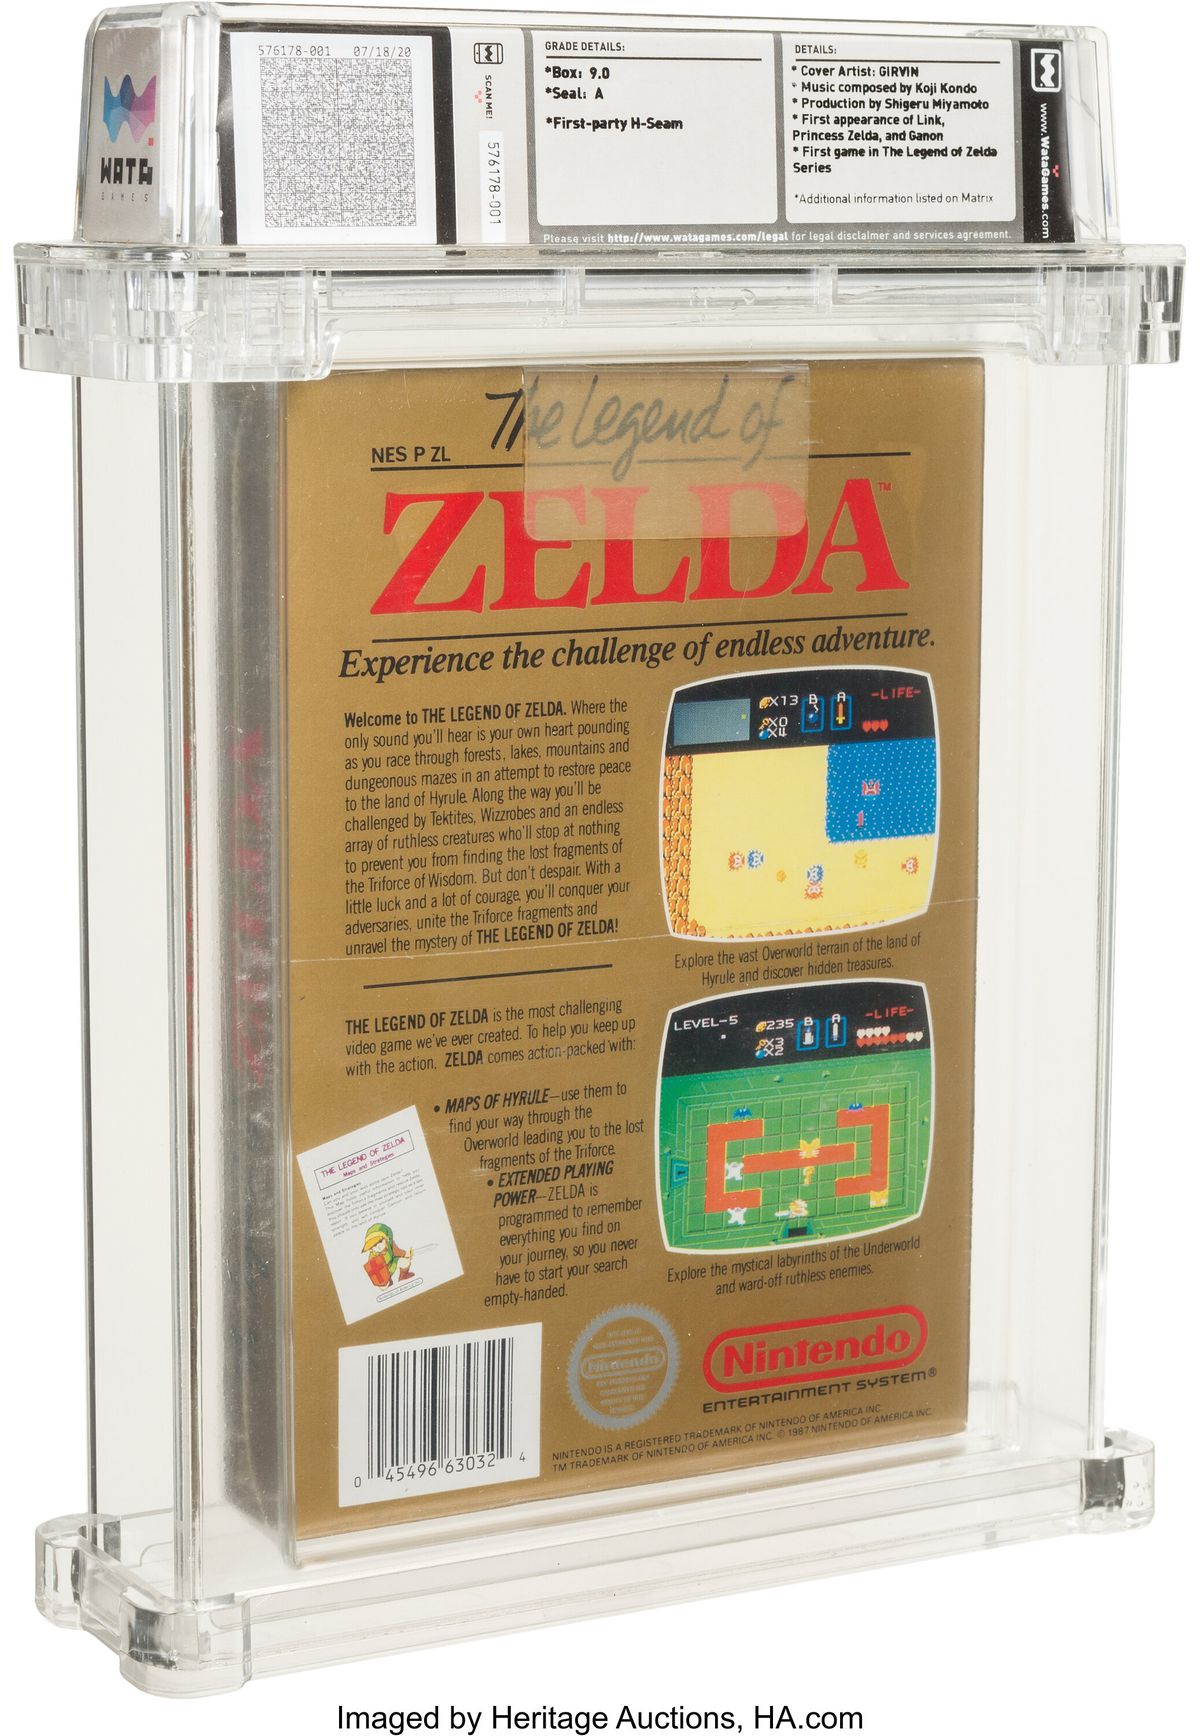 an image of a sealed Zelda cartridge 